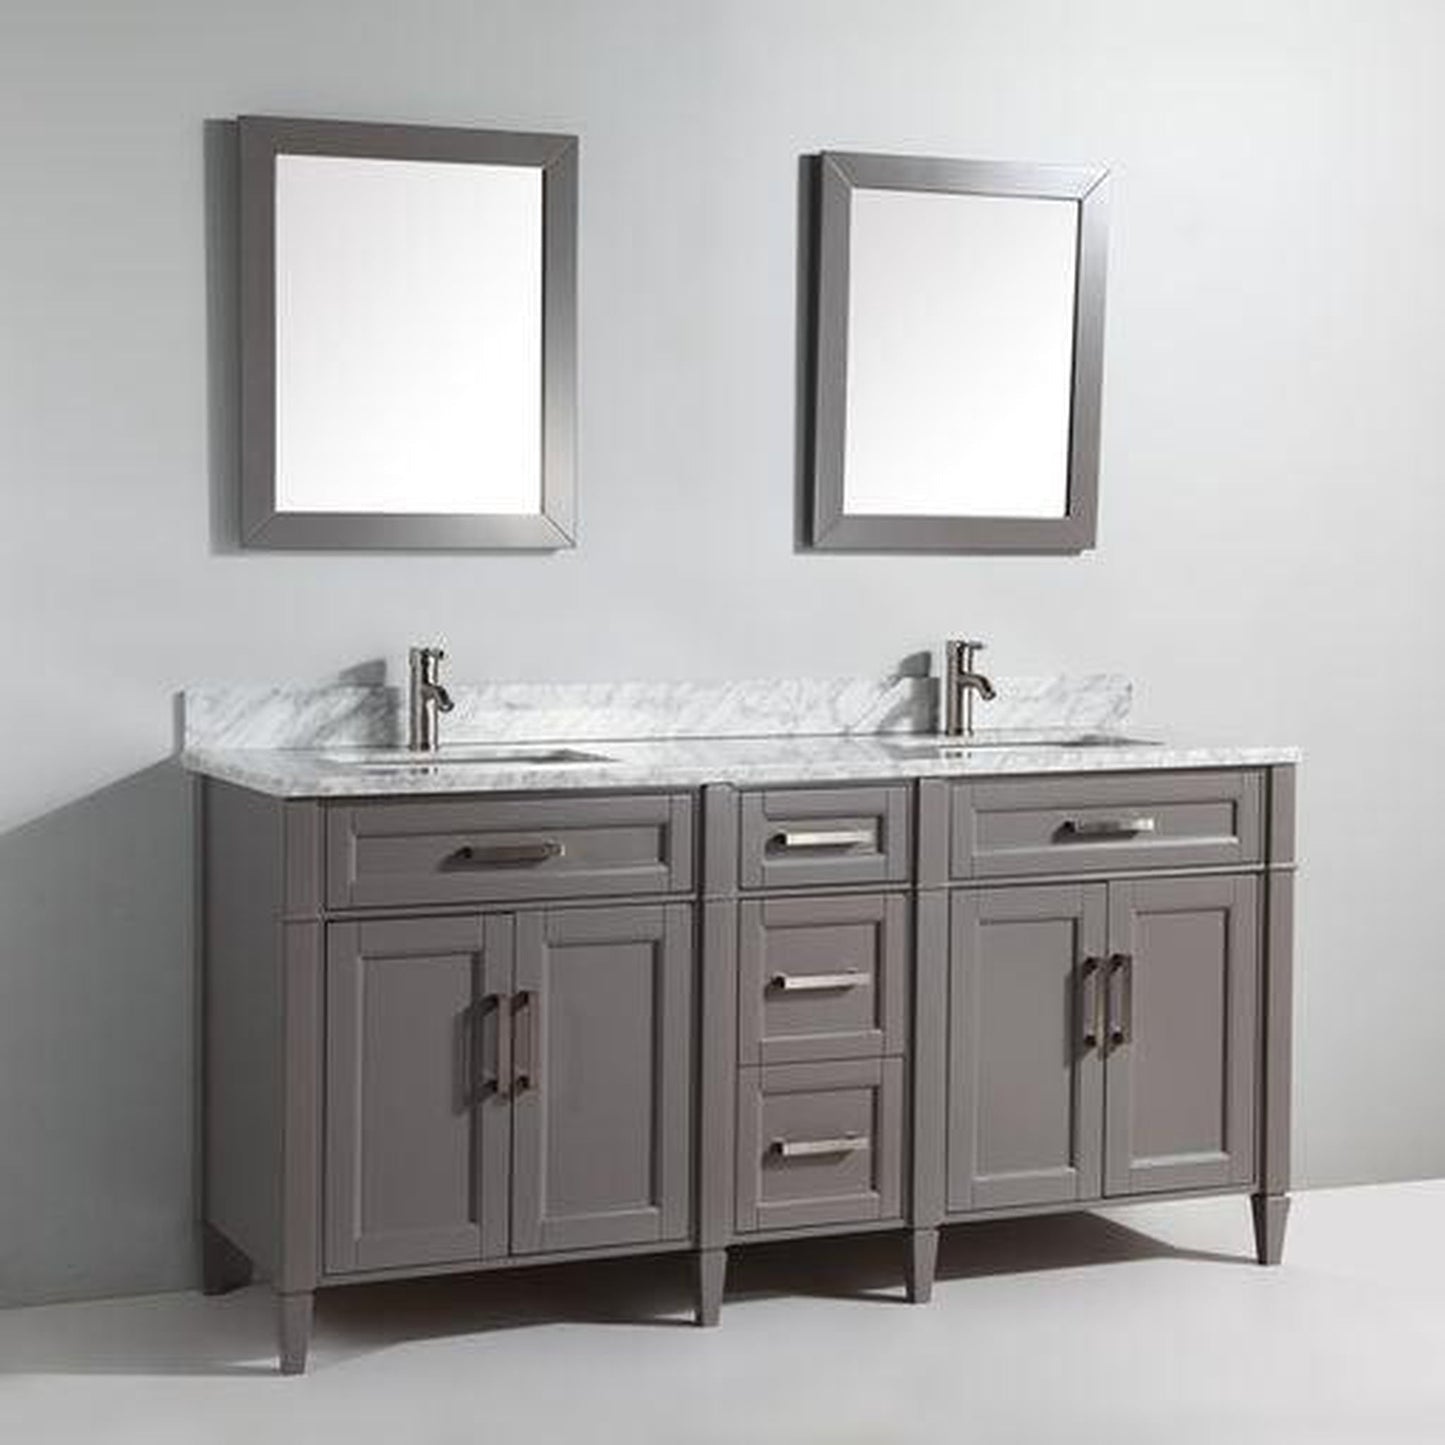 Vanity Art Savona 72" Double Gray Freestanding Modern Bathroom Vanity Set With Carrara Marble Top, Undermount Ceramic Sink, 5 Dovetail Drawer Cabinet, Backsplash and 2 Mirrors